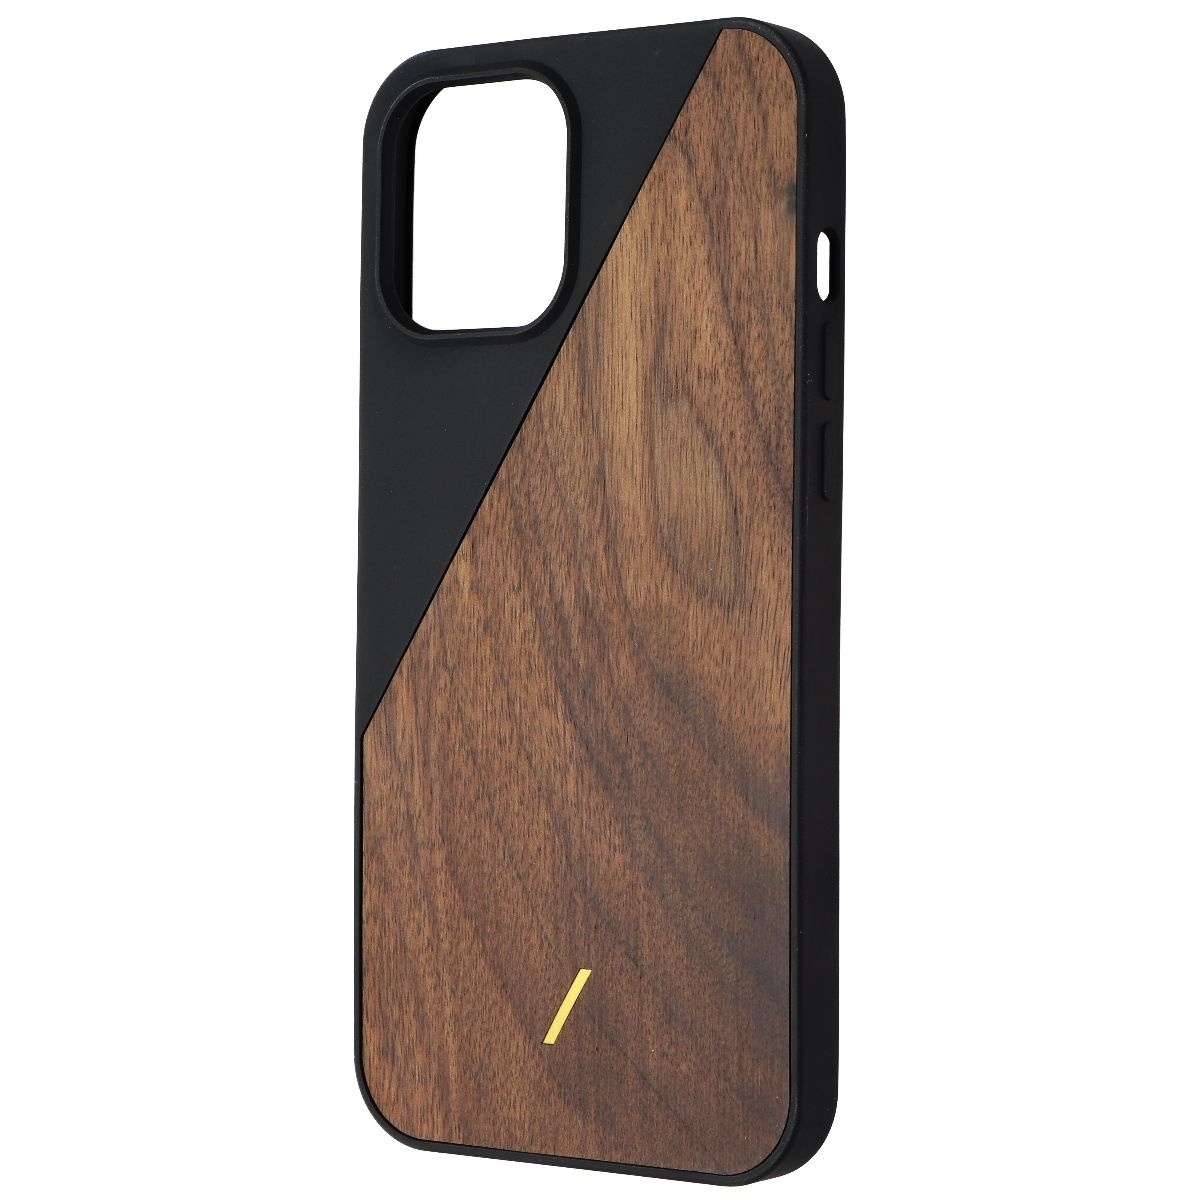 Native Union Clic Wooden Case For IPhone 12 Pro Max - Walnut/Black